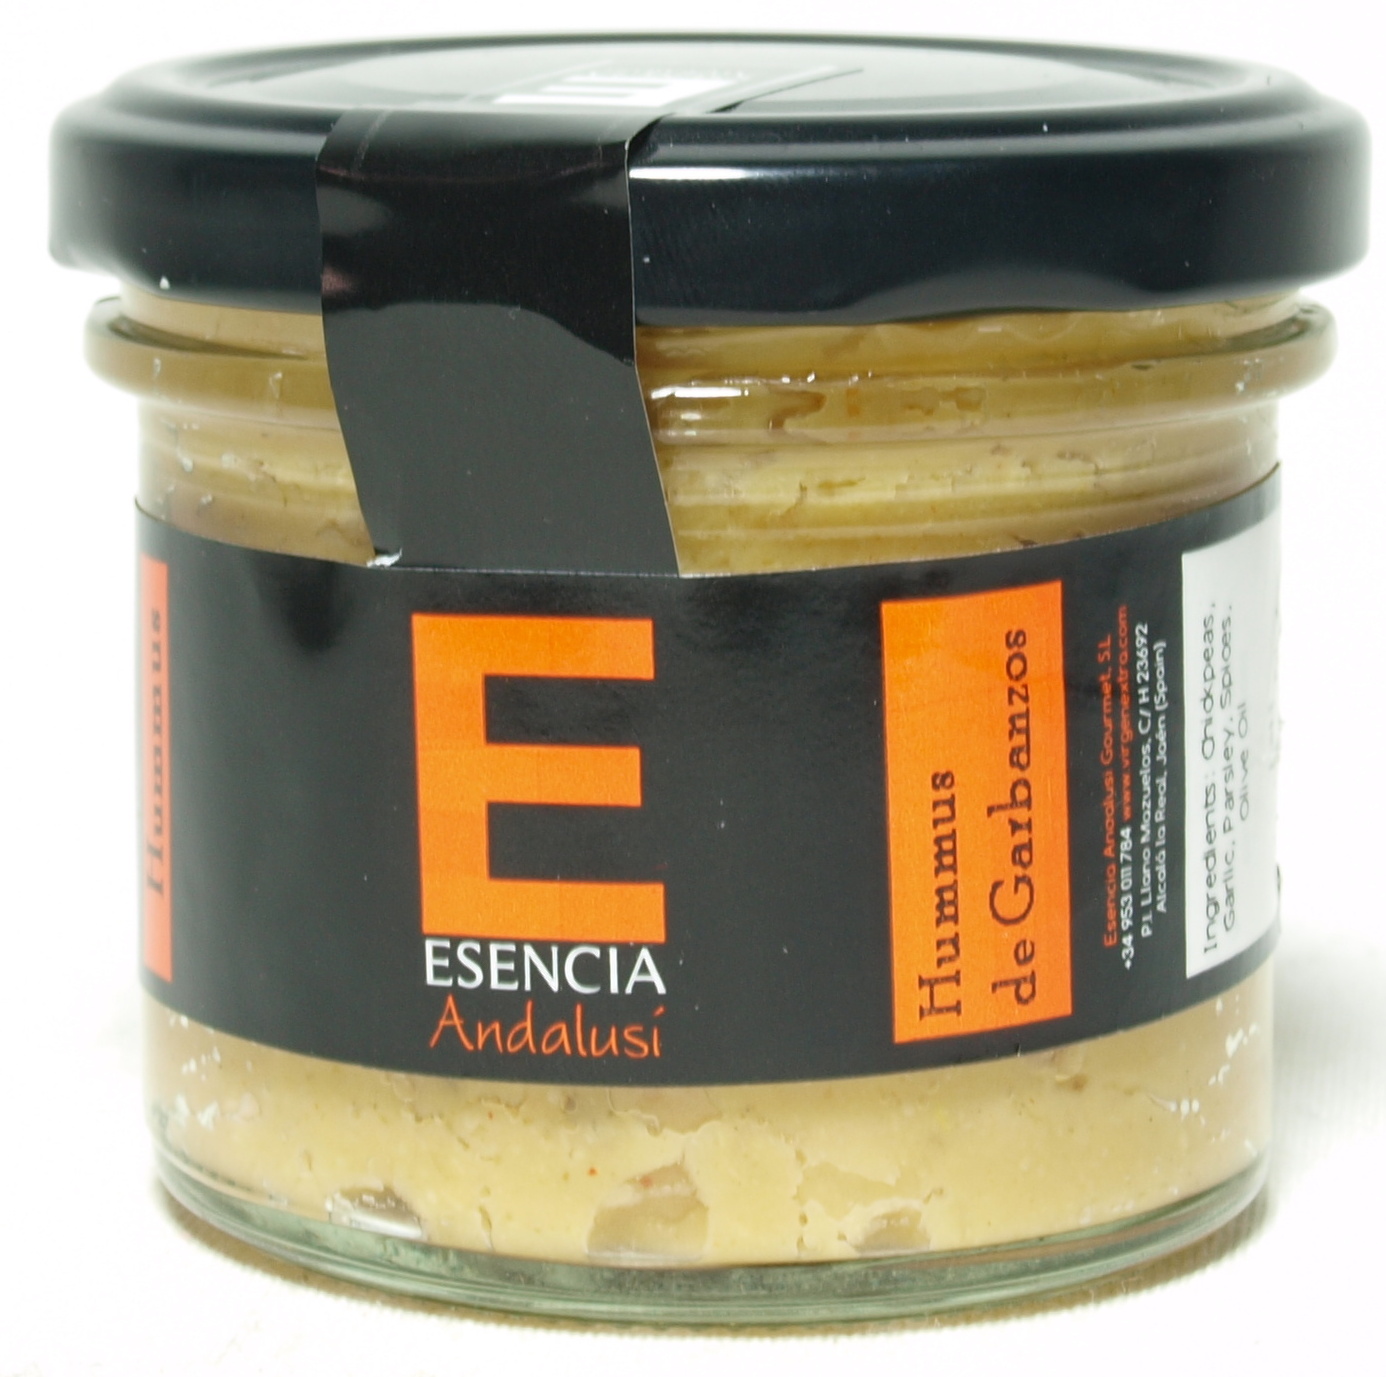 I-Andalusian Essence hummus